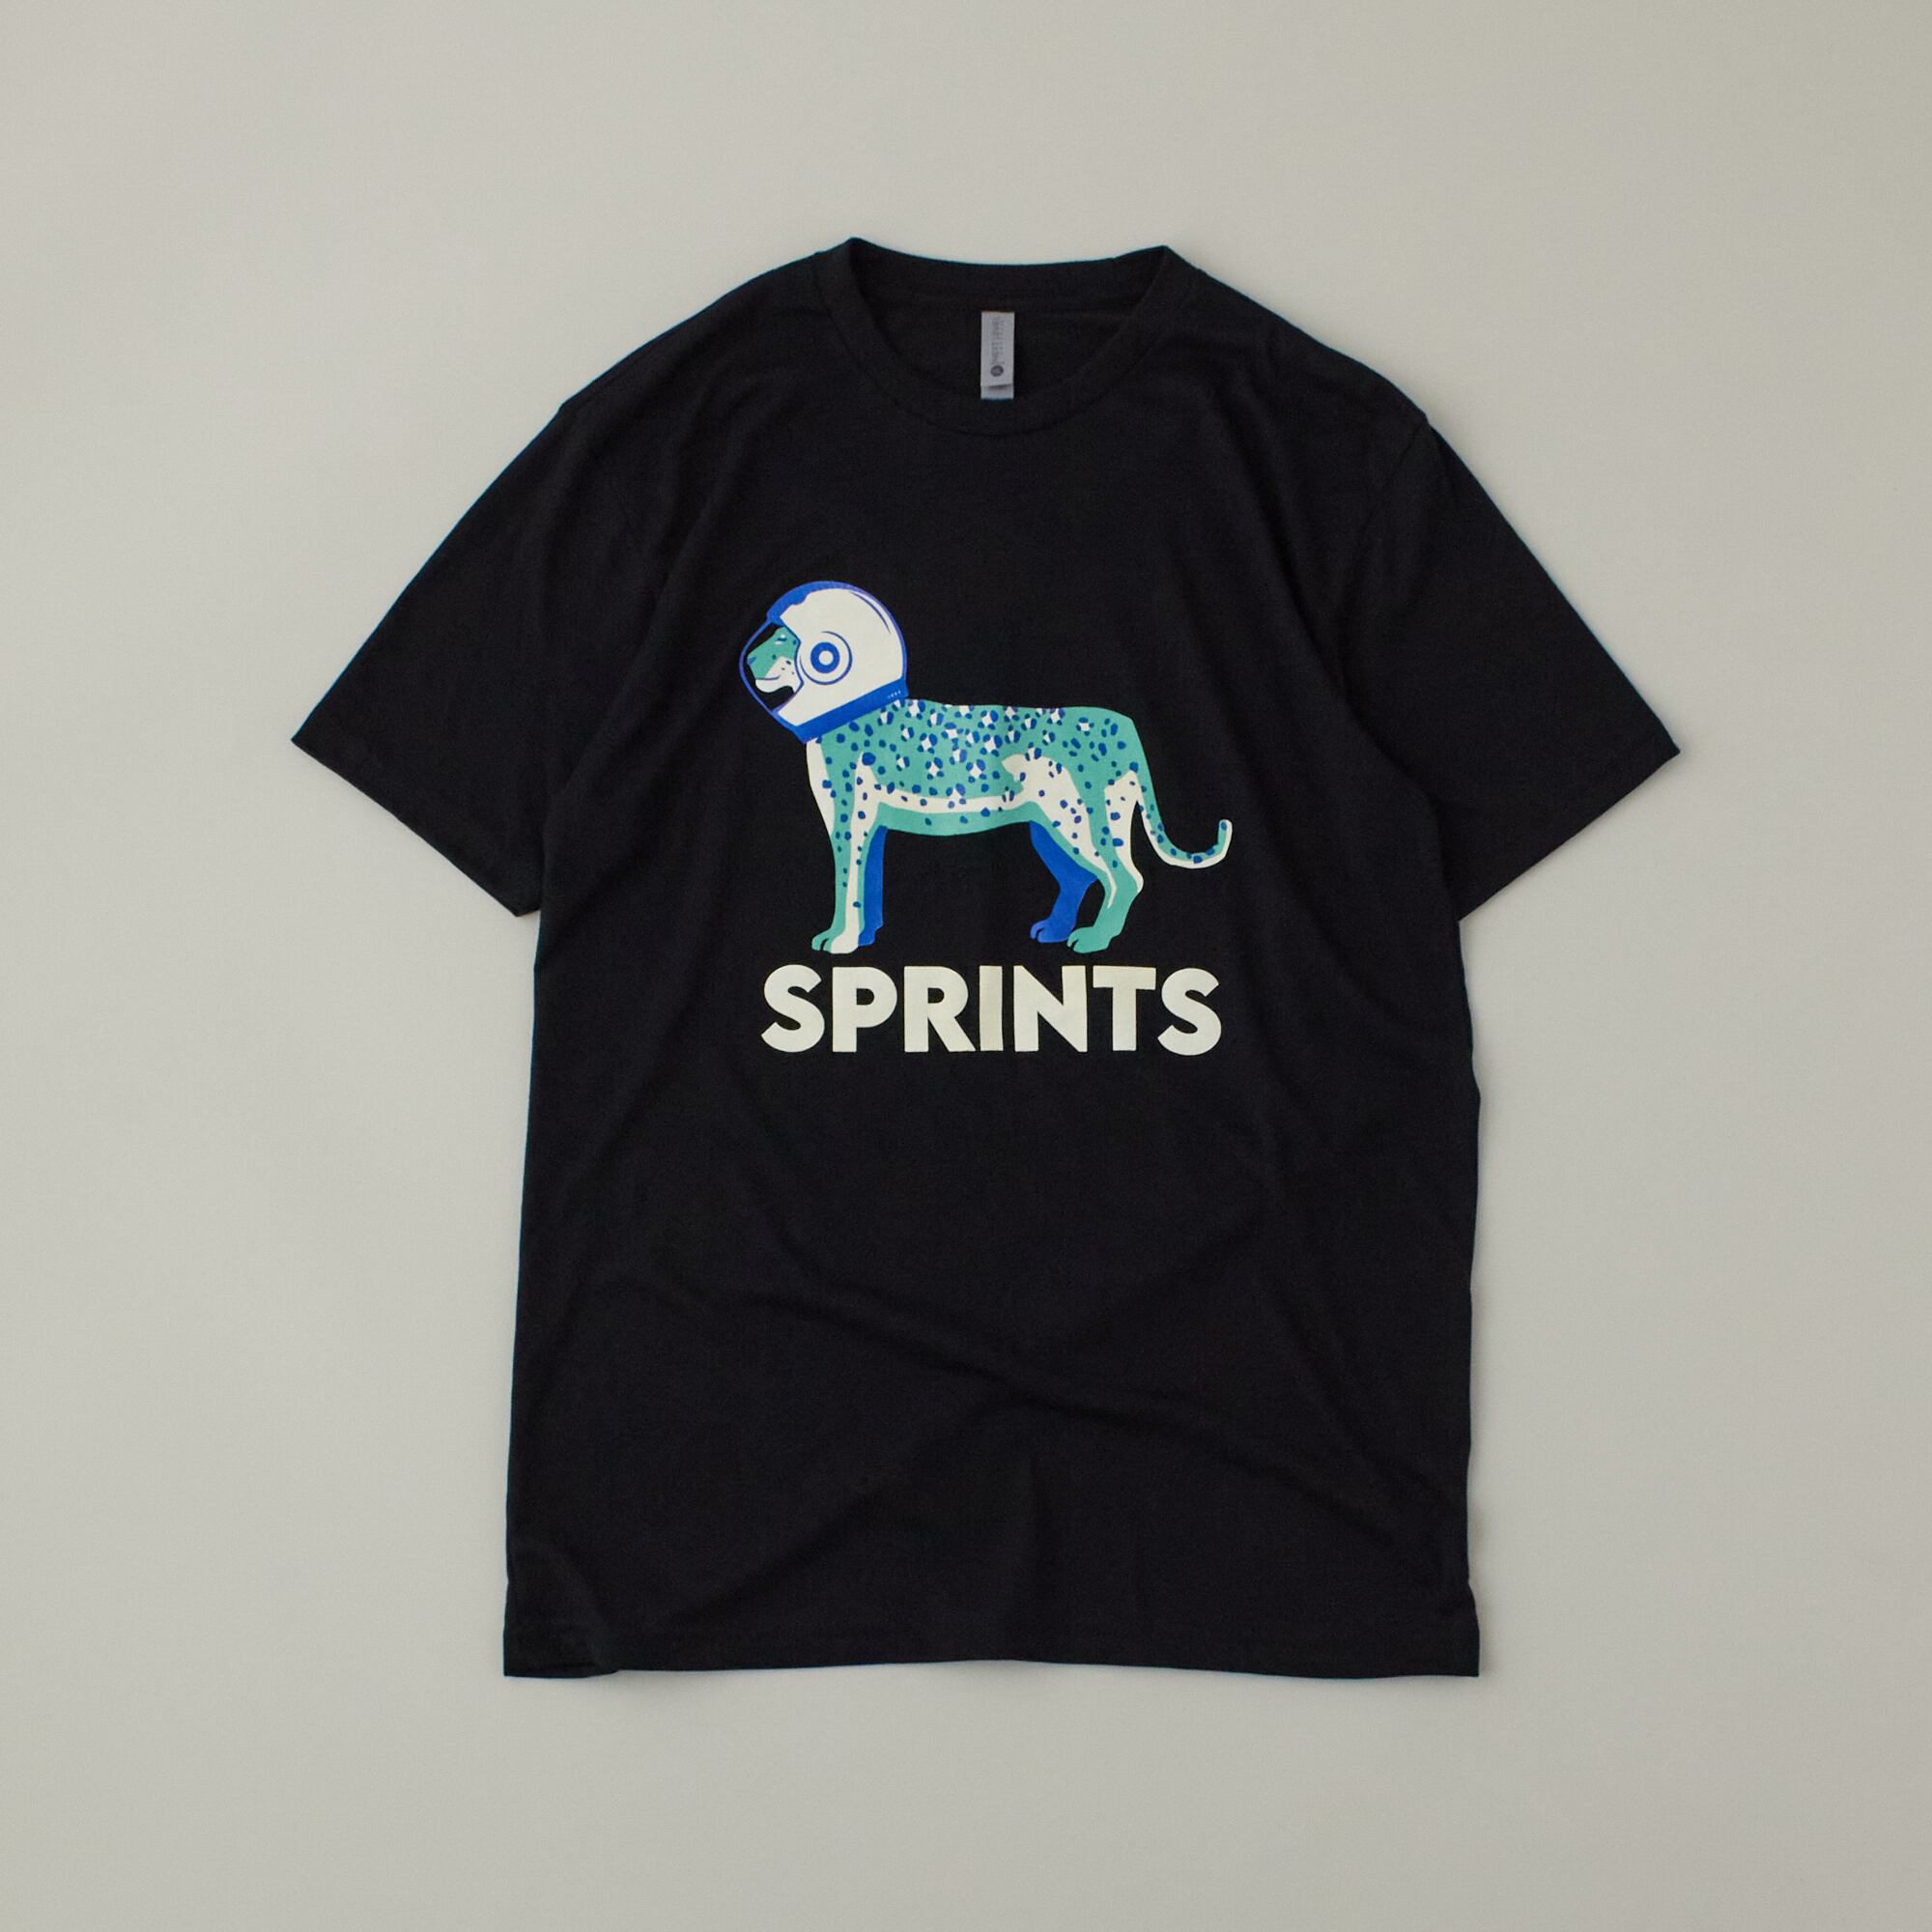 SPRINTS(スプリンツ) Astro Jag T-shirt Black メンズ・ウィメンズTシャツ